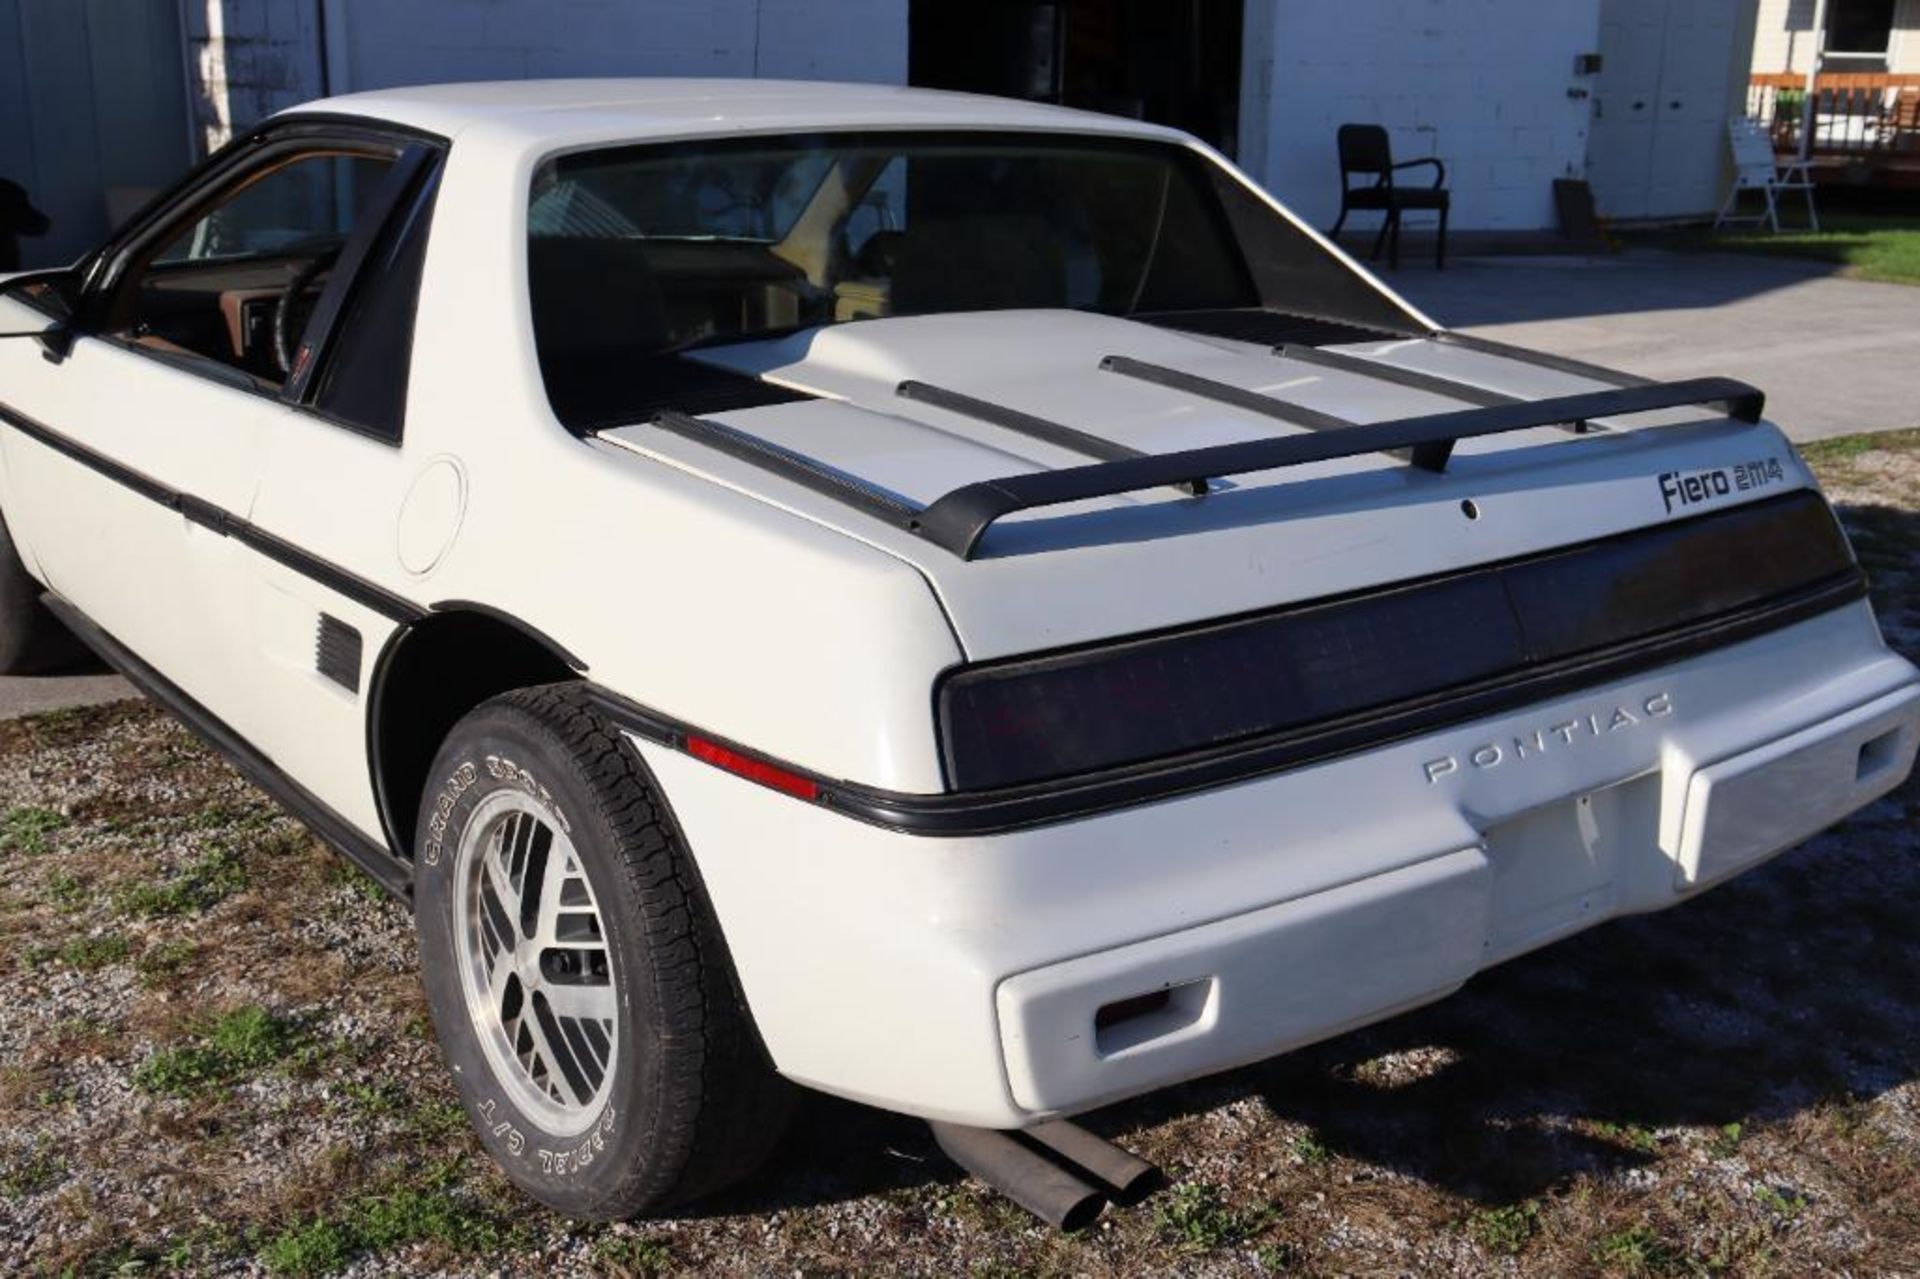 1985 Pontiac Fiero - Image 6 of 63